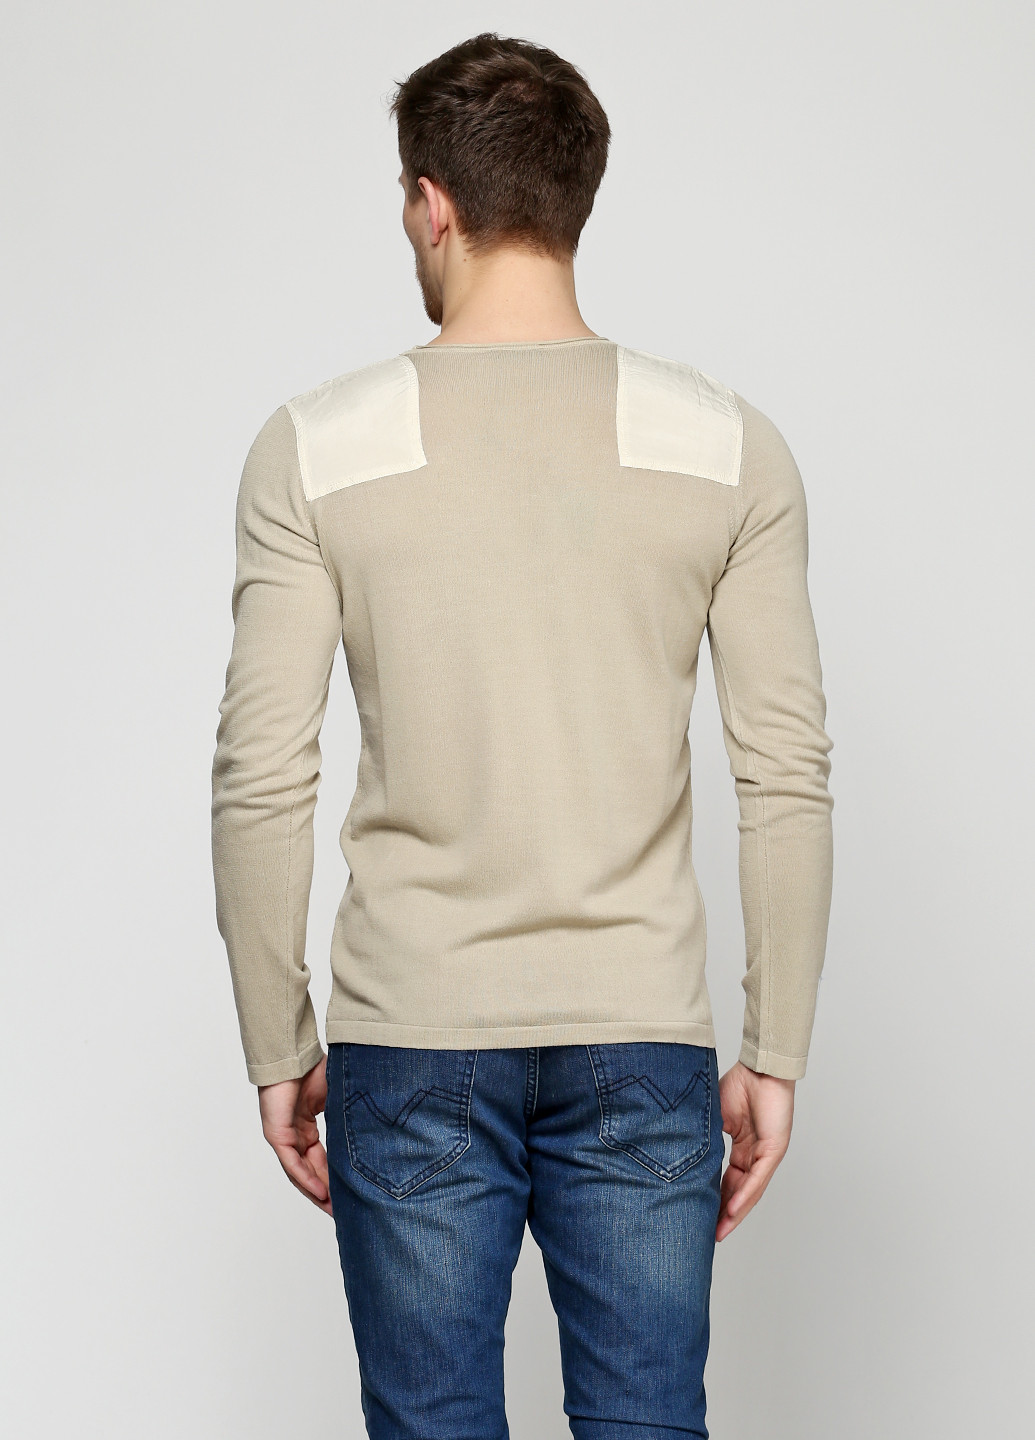 Бежевый демисезонный пуловер пуловер Barbieri